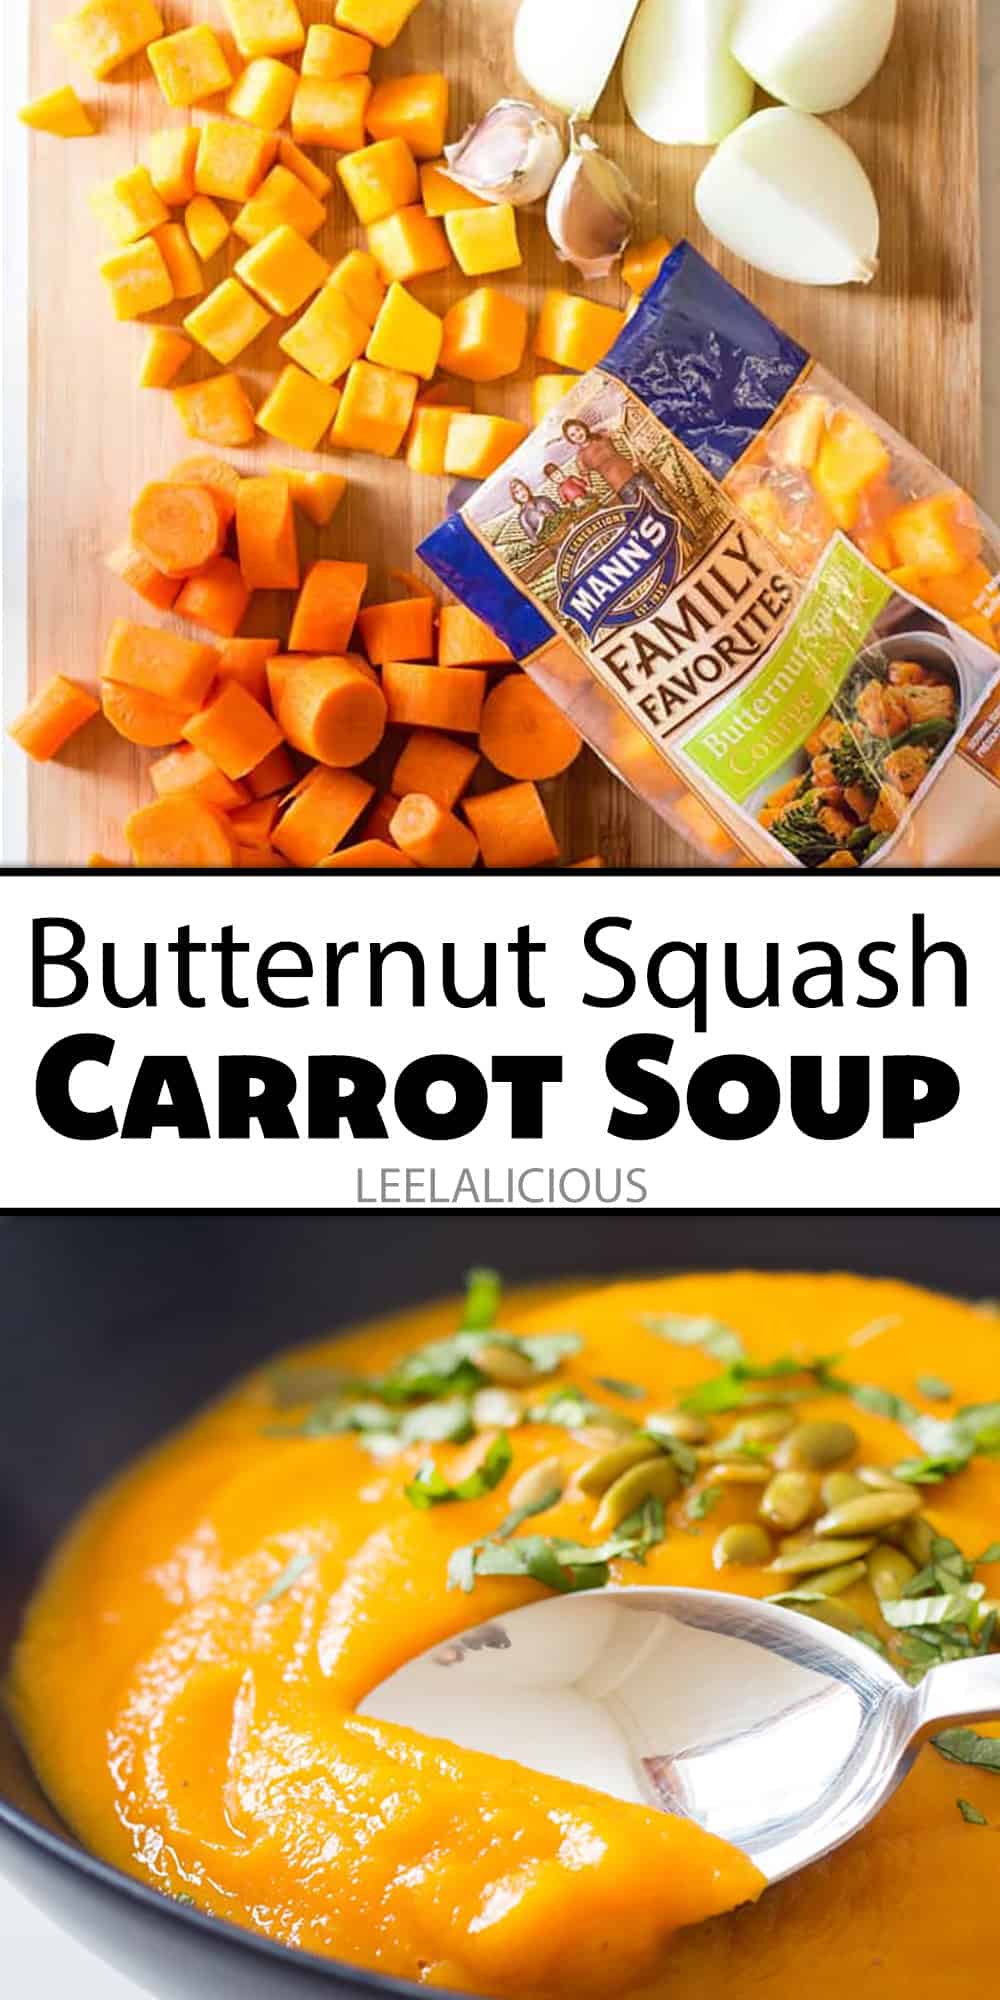 Butternut Squash and Carrot Soup Recipe